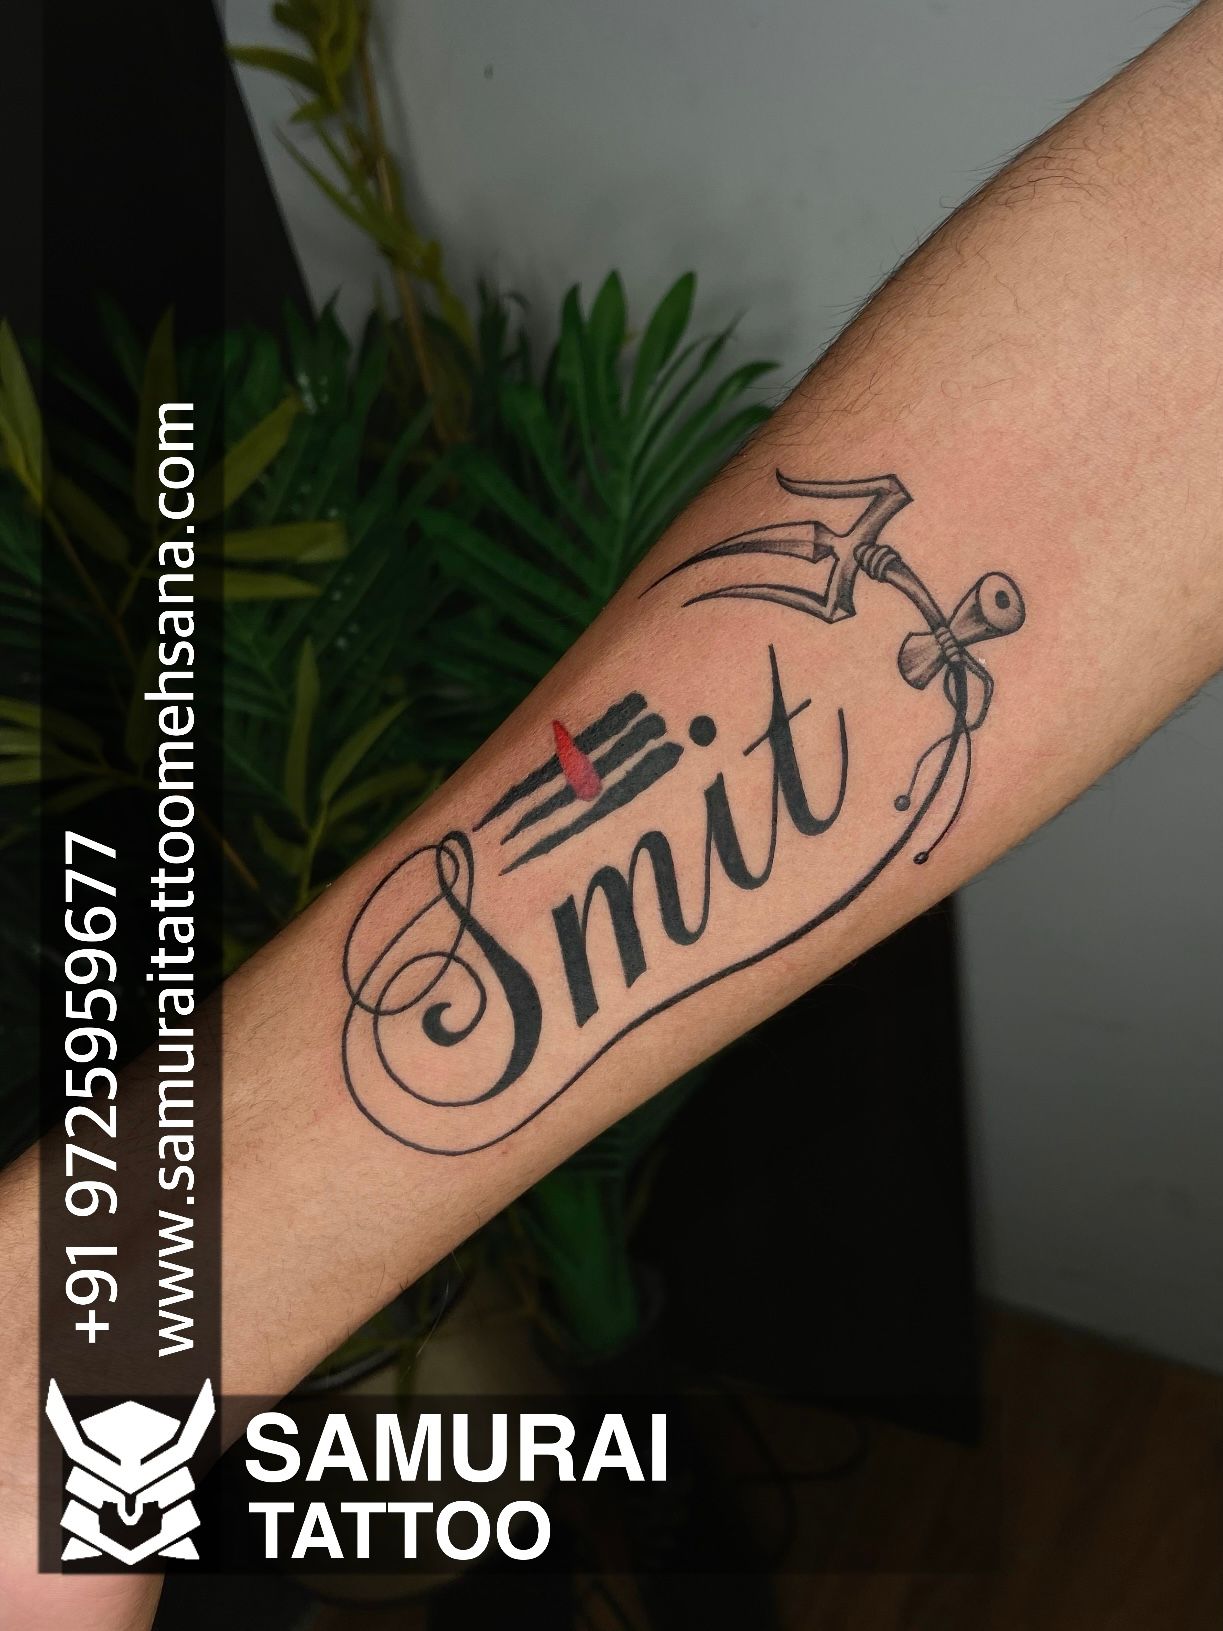 Family tattoo  By Mad inkk tattoo studio  Facebook